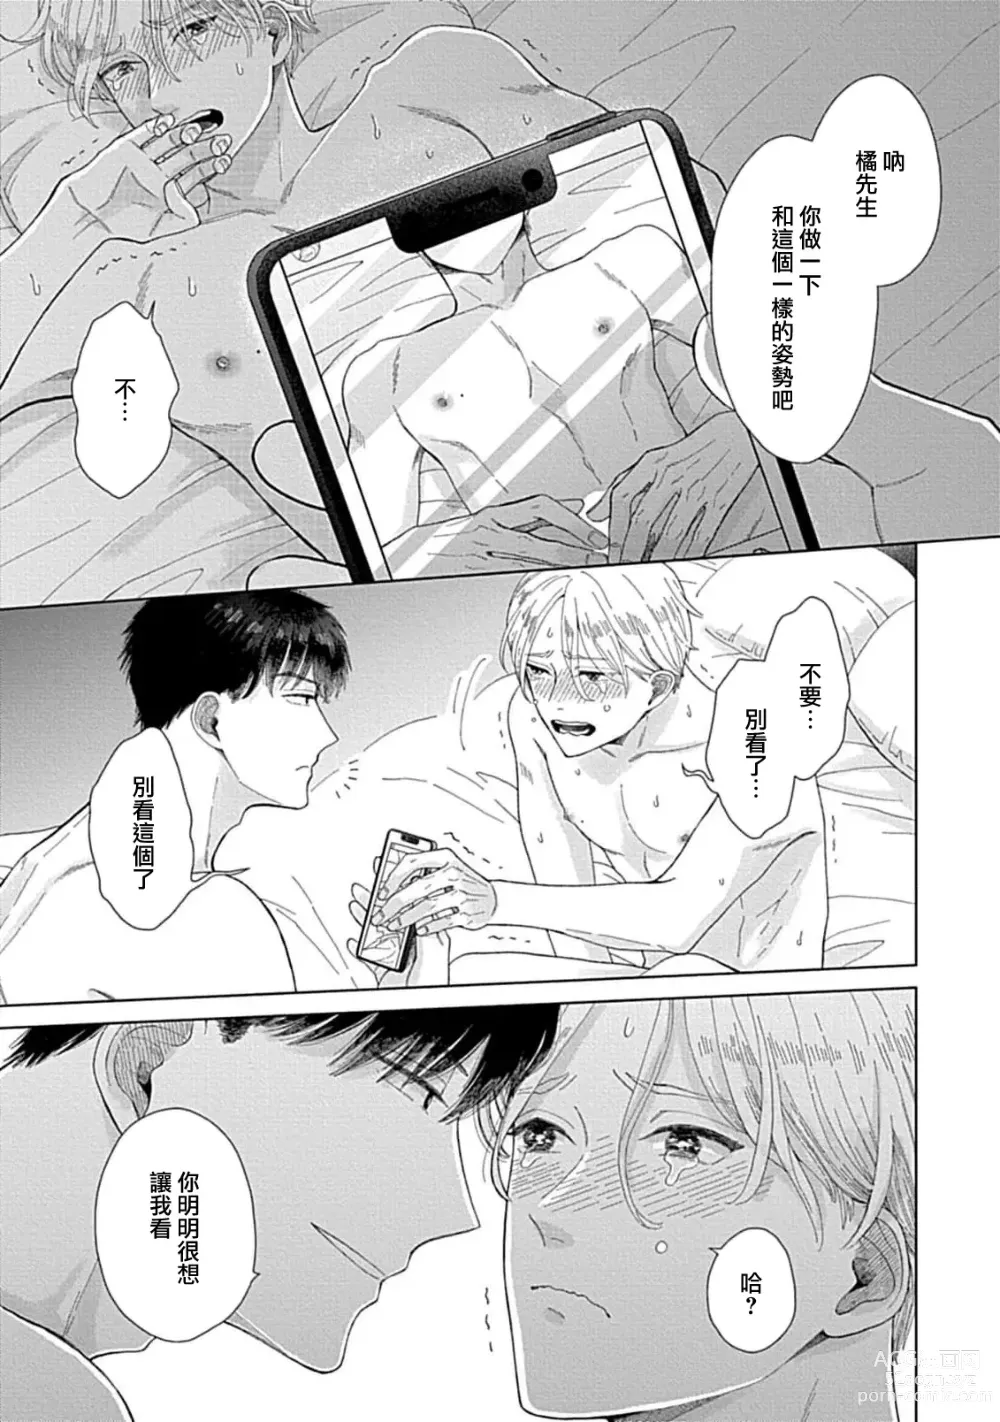 Page 3 of manga 并非不喜但请抱紧1-2